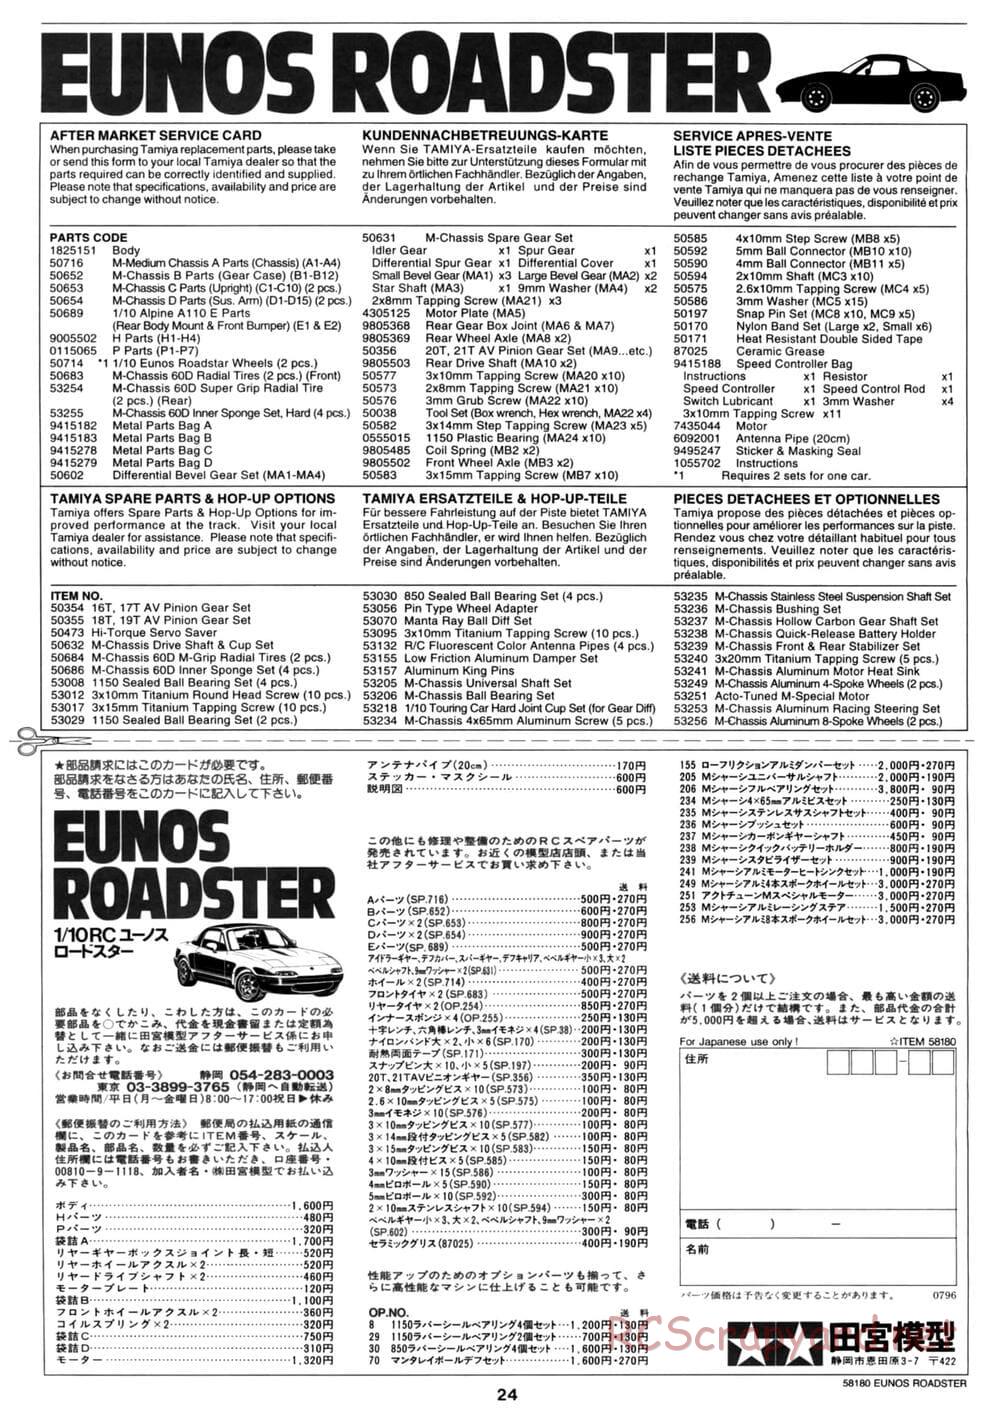 Tamiya - Eunos Roadster - M02M Chassis - Manual - Page 24